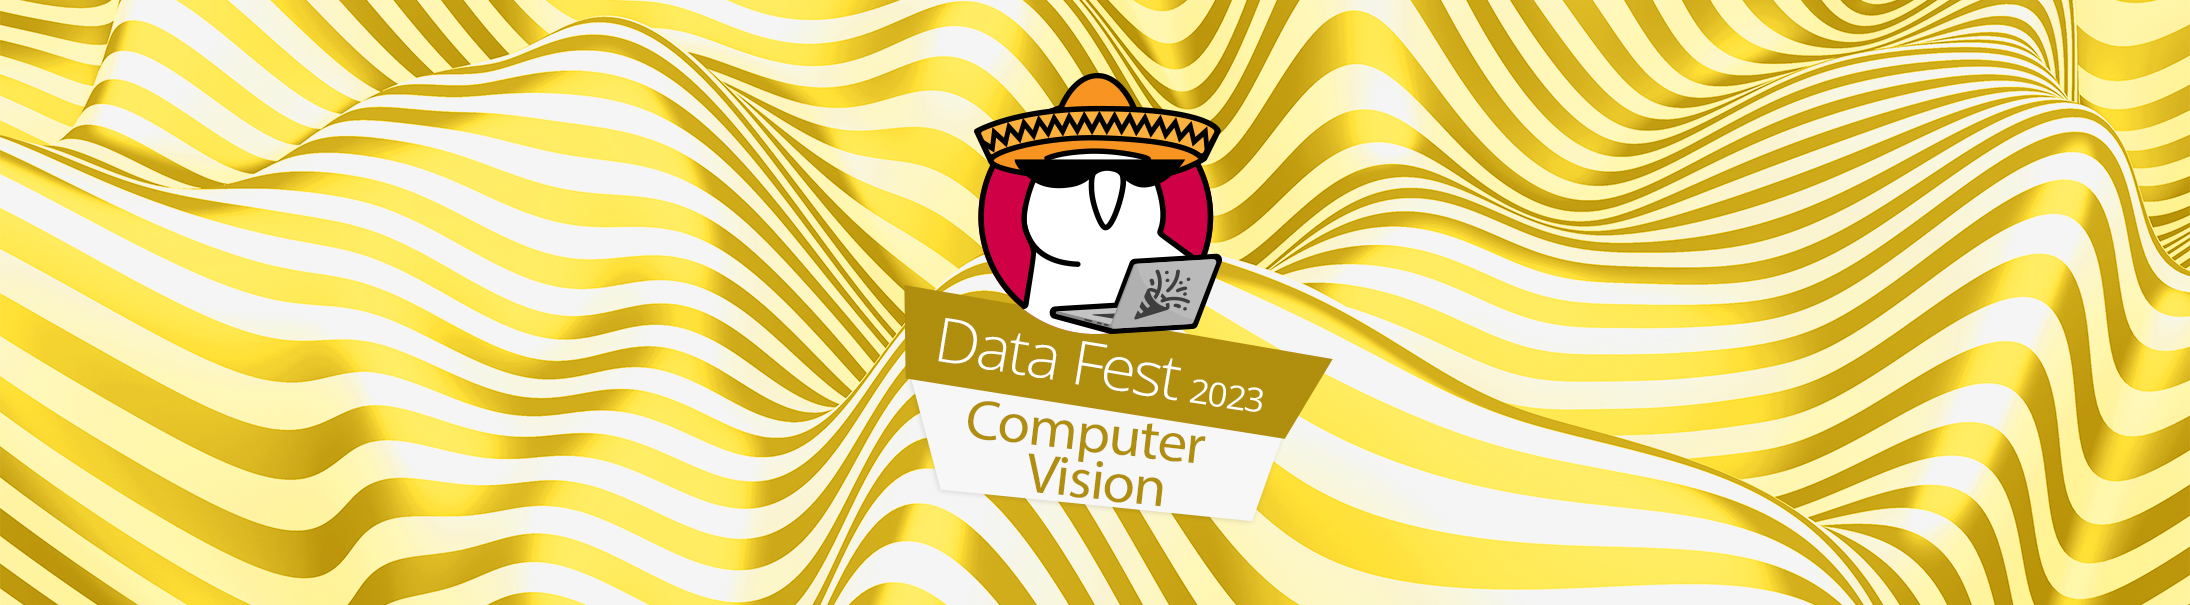 Computer Vision (Data Fest 2023)